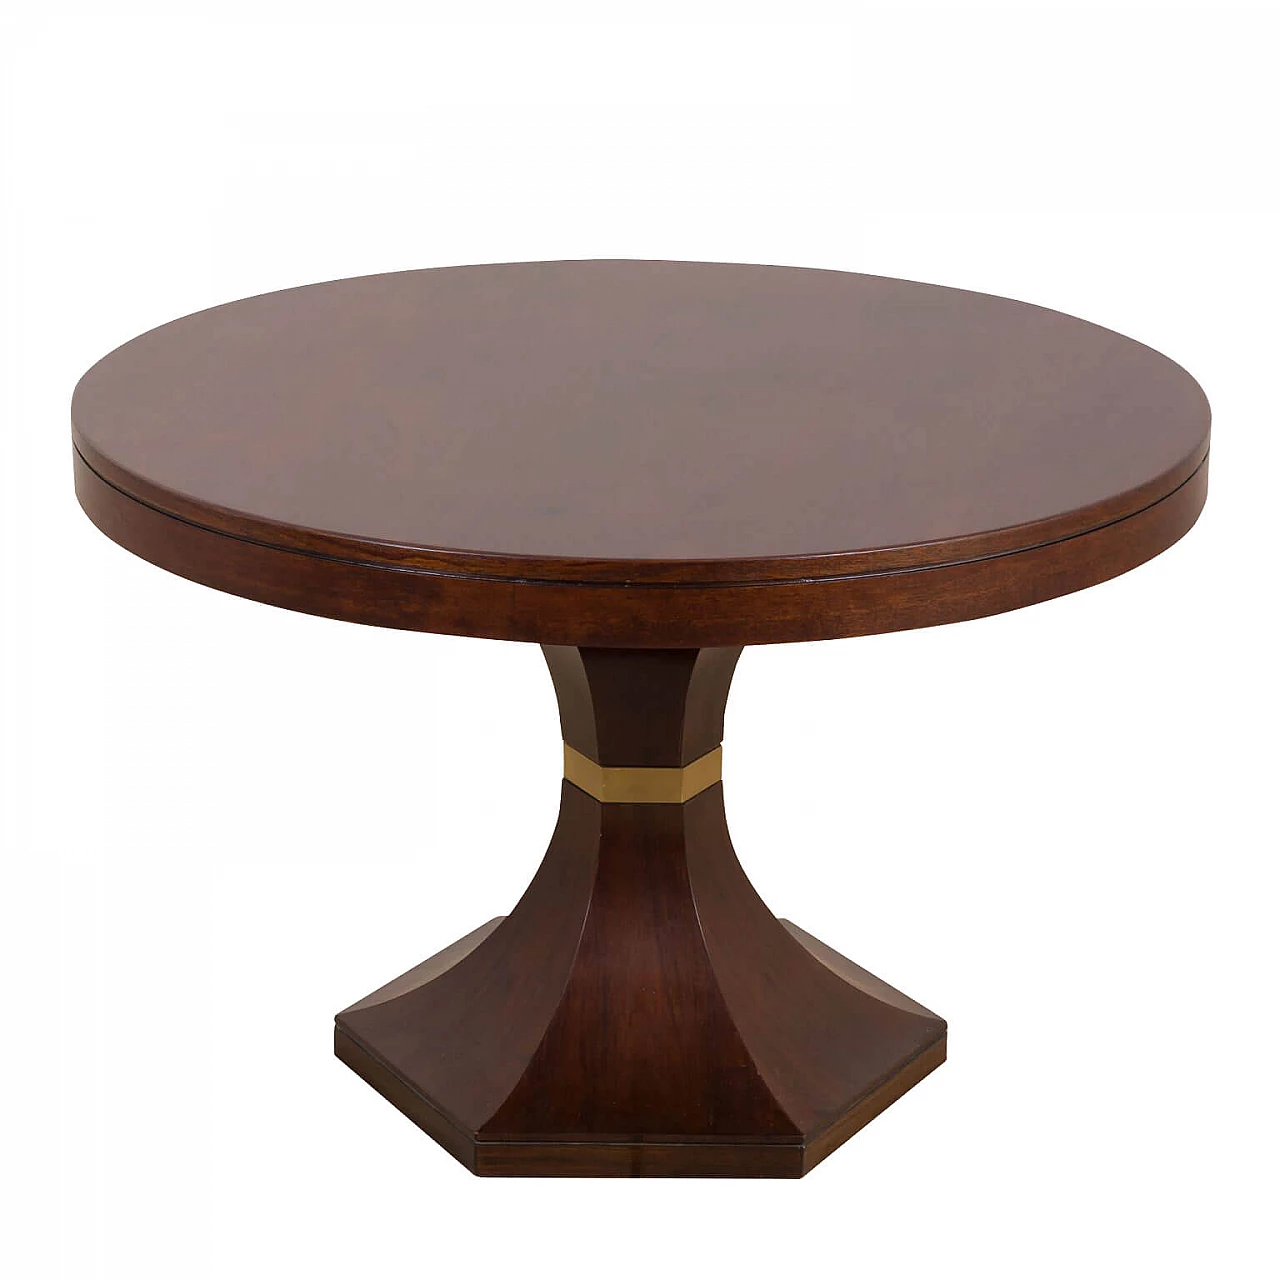 Round centre table in walnut and brass attributable to Carlo Di Carli, 60s 1332120